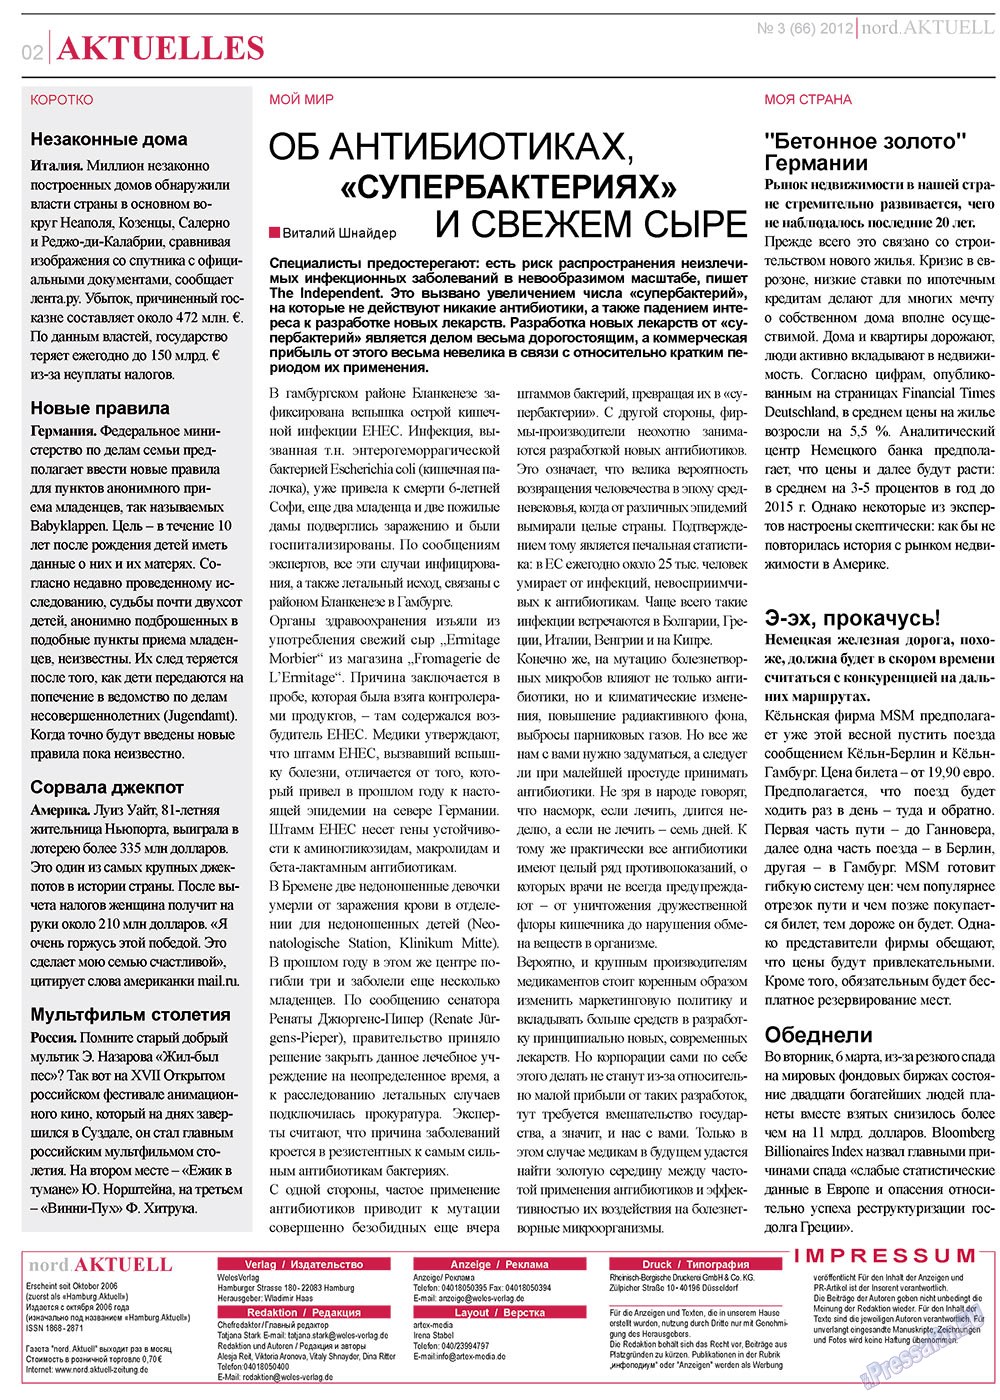 nord.Aktuell, газета. 2012 №3 стр.2